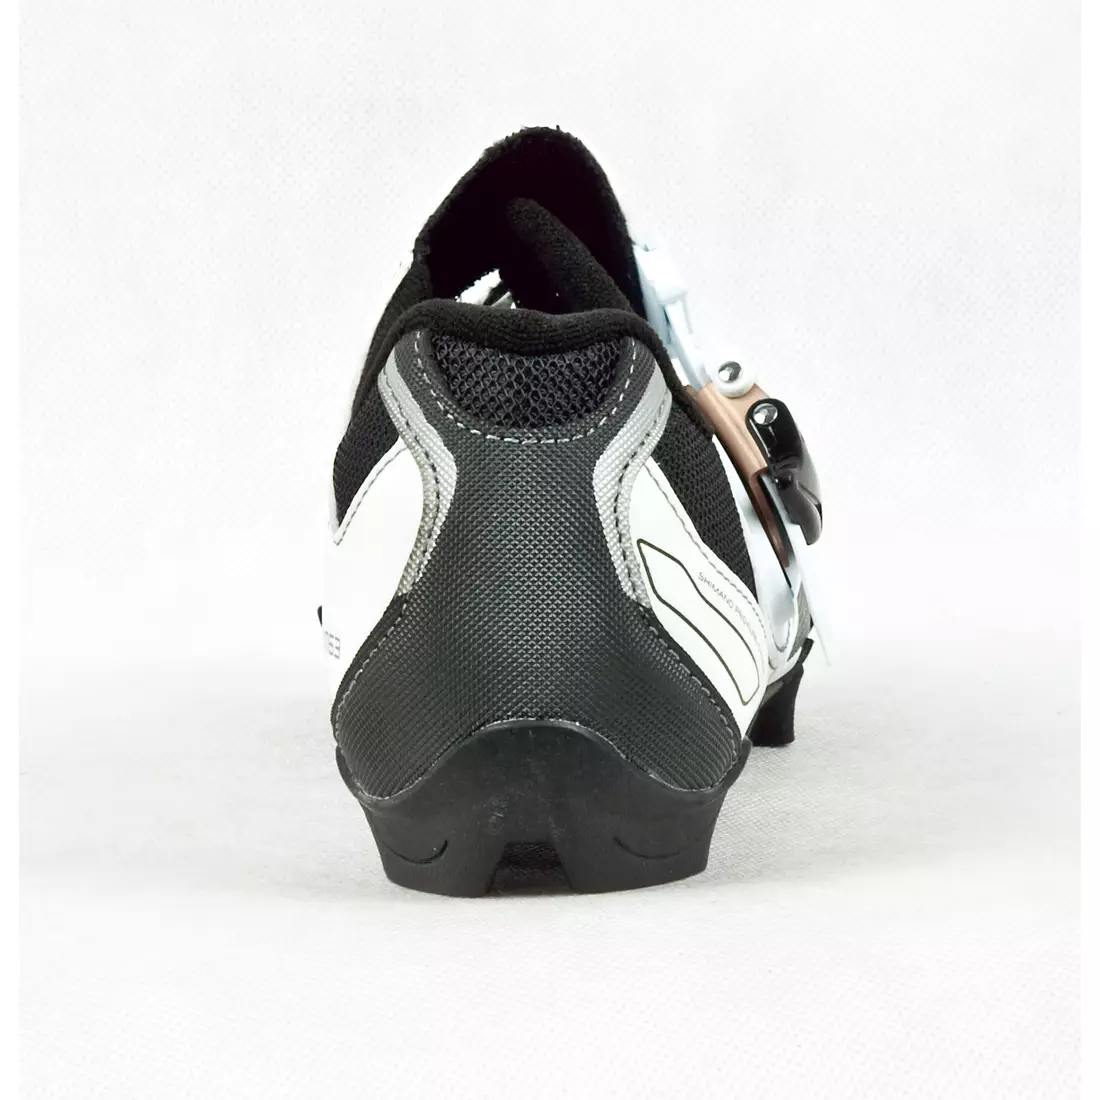 SHIMANO SH-WM63 - pantofi de ciclism dama, culoare: alb